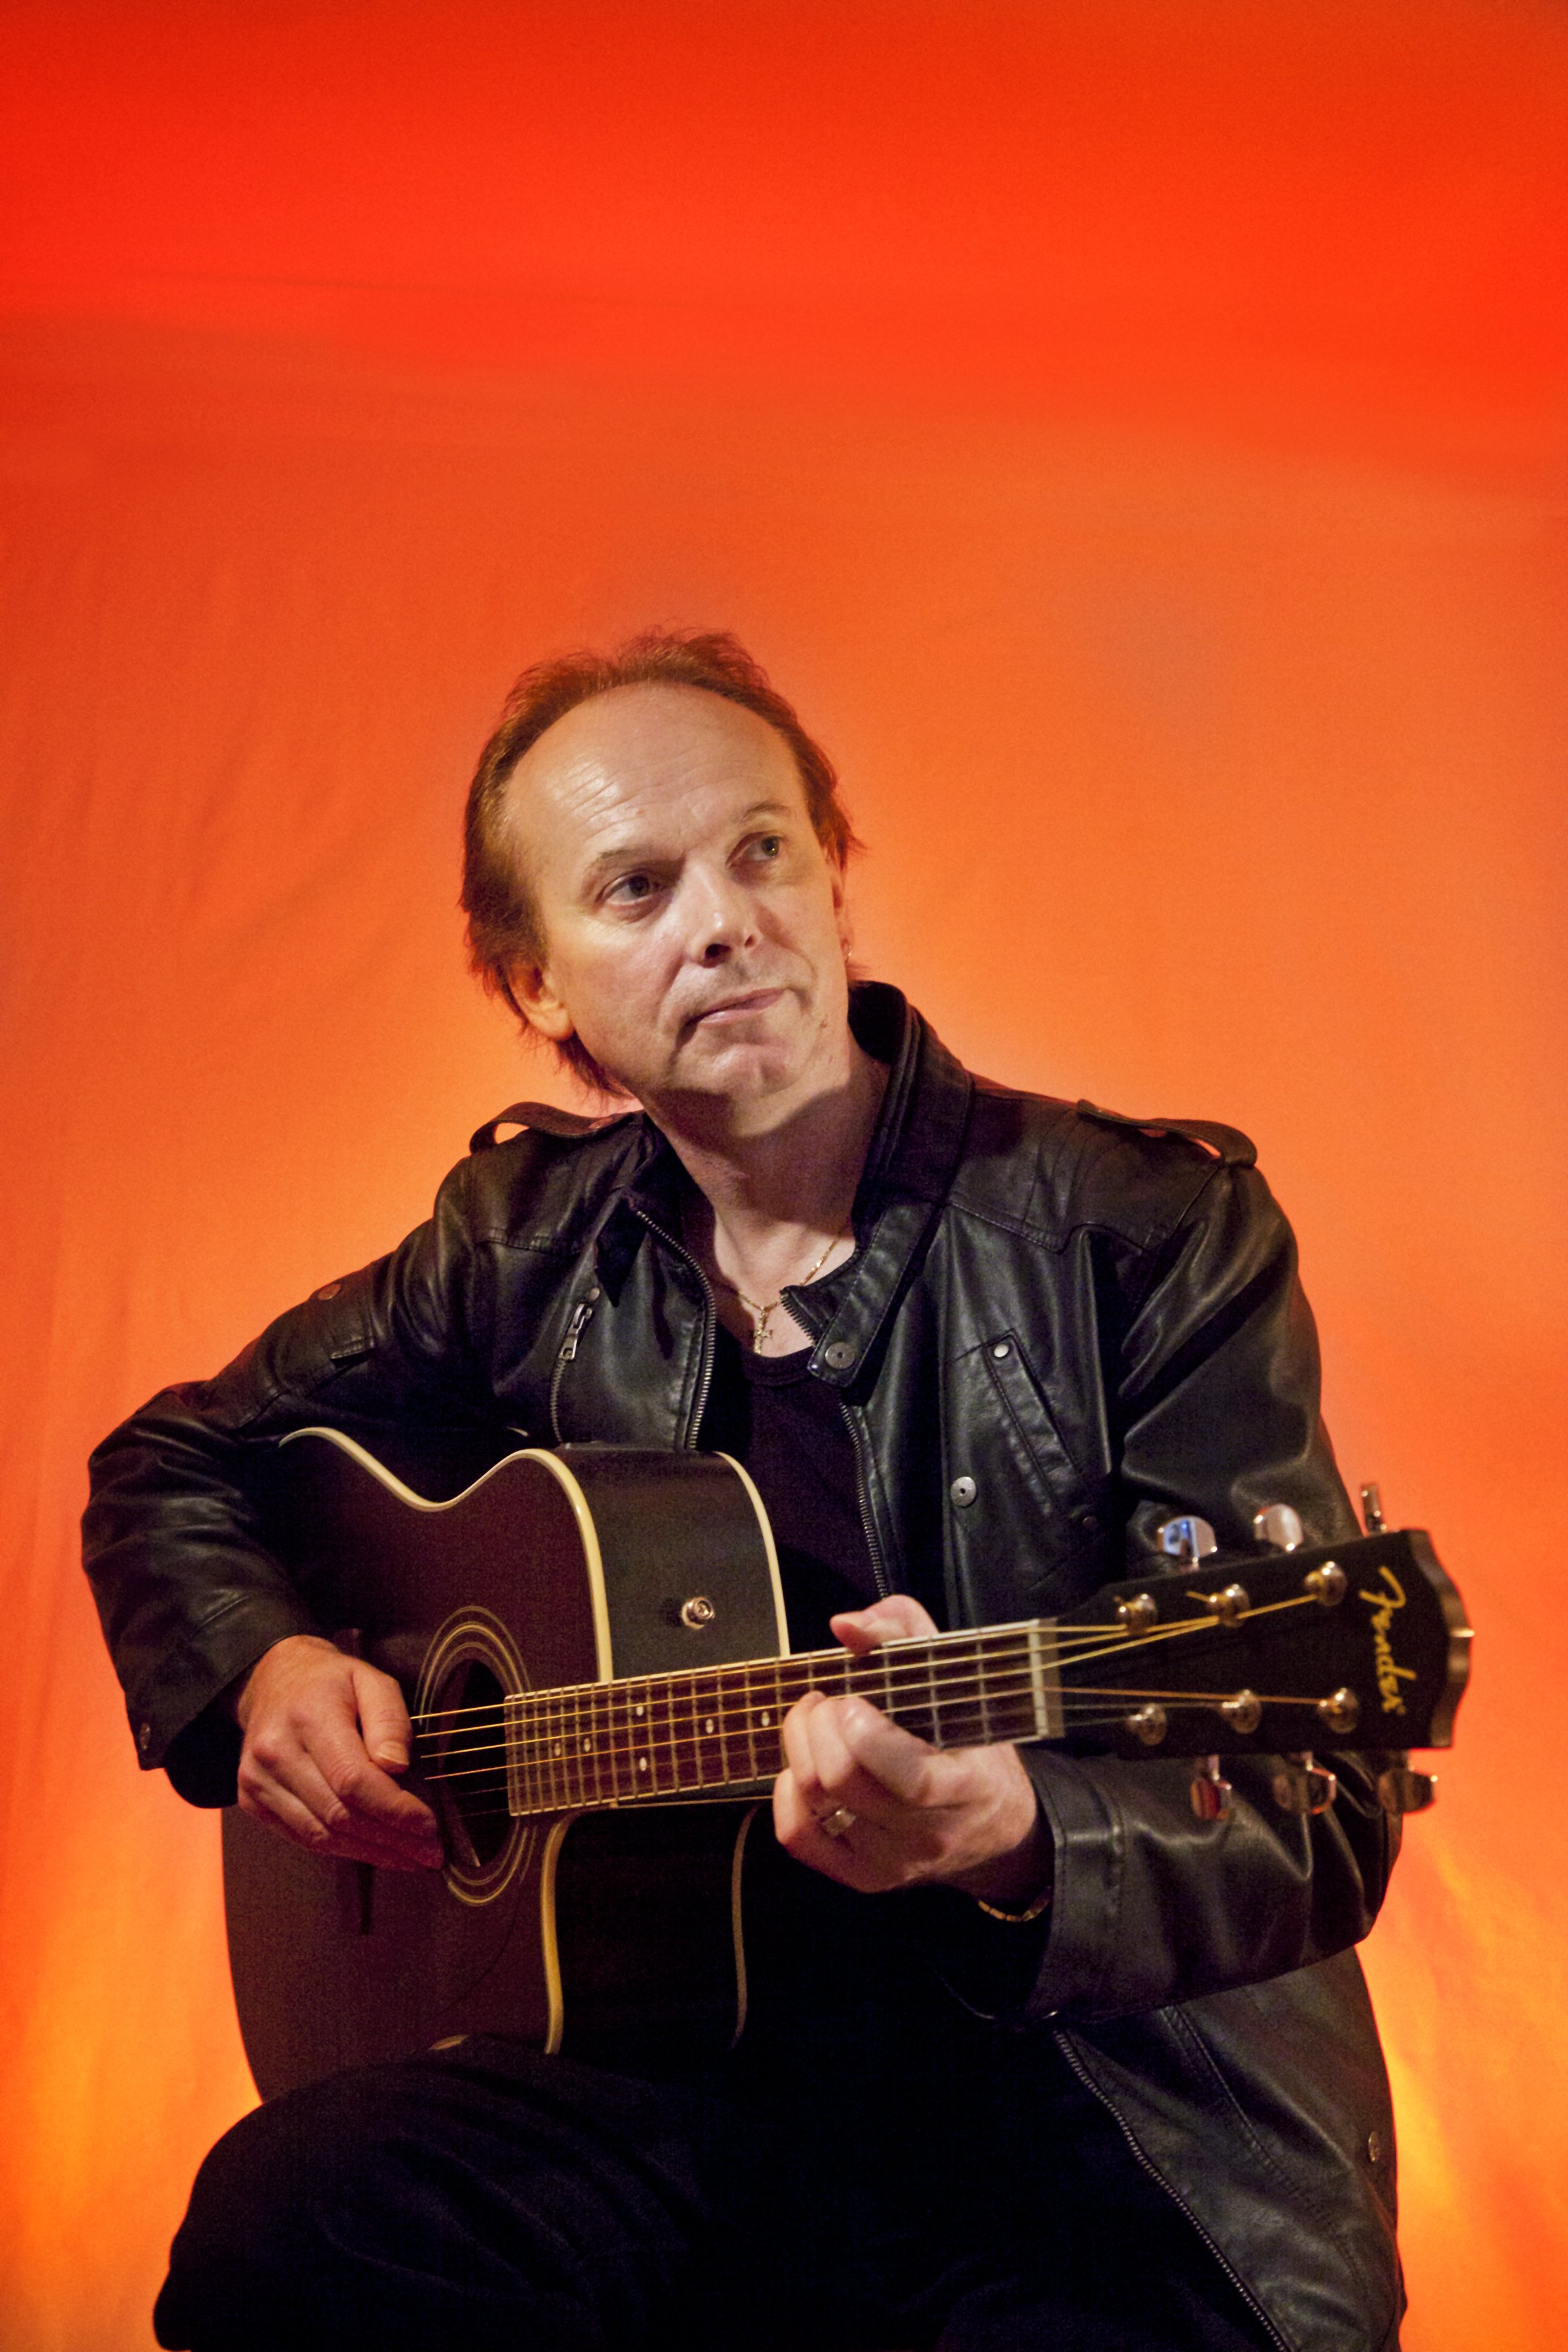 Dave Long 'Sahara' 26 March 2013